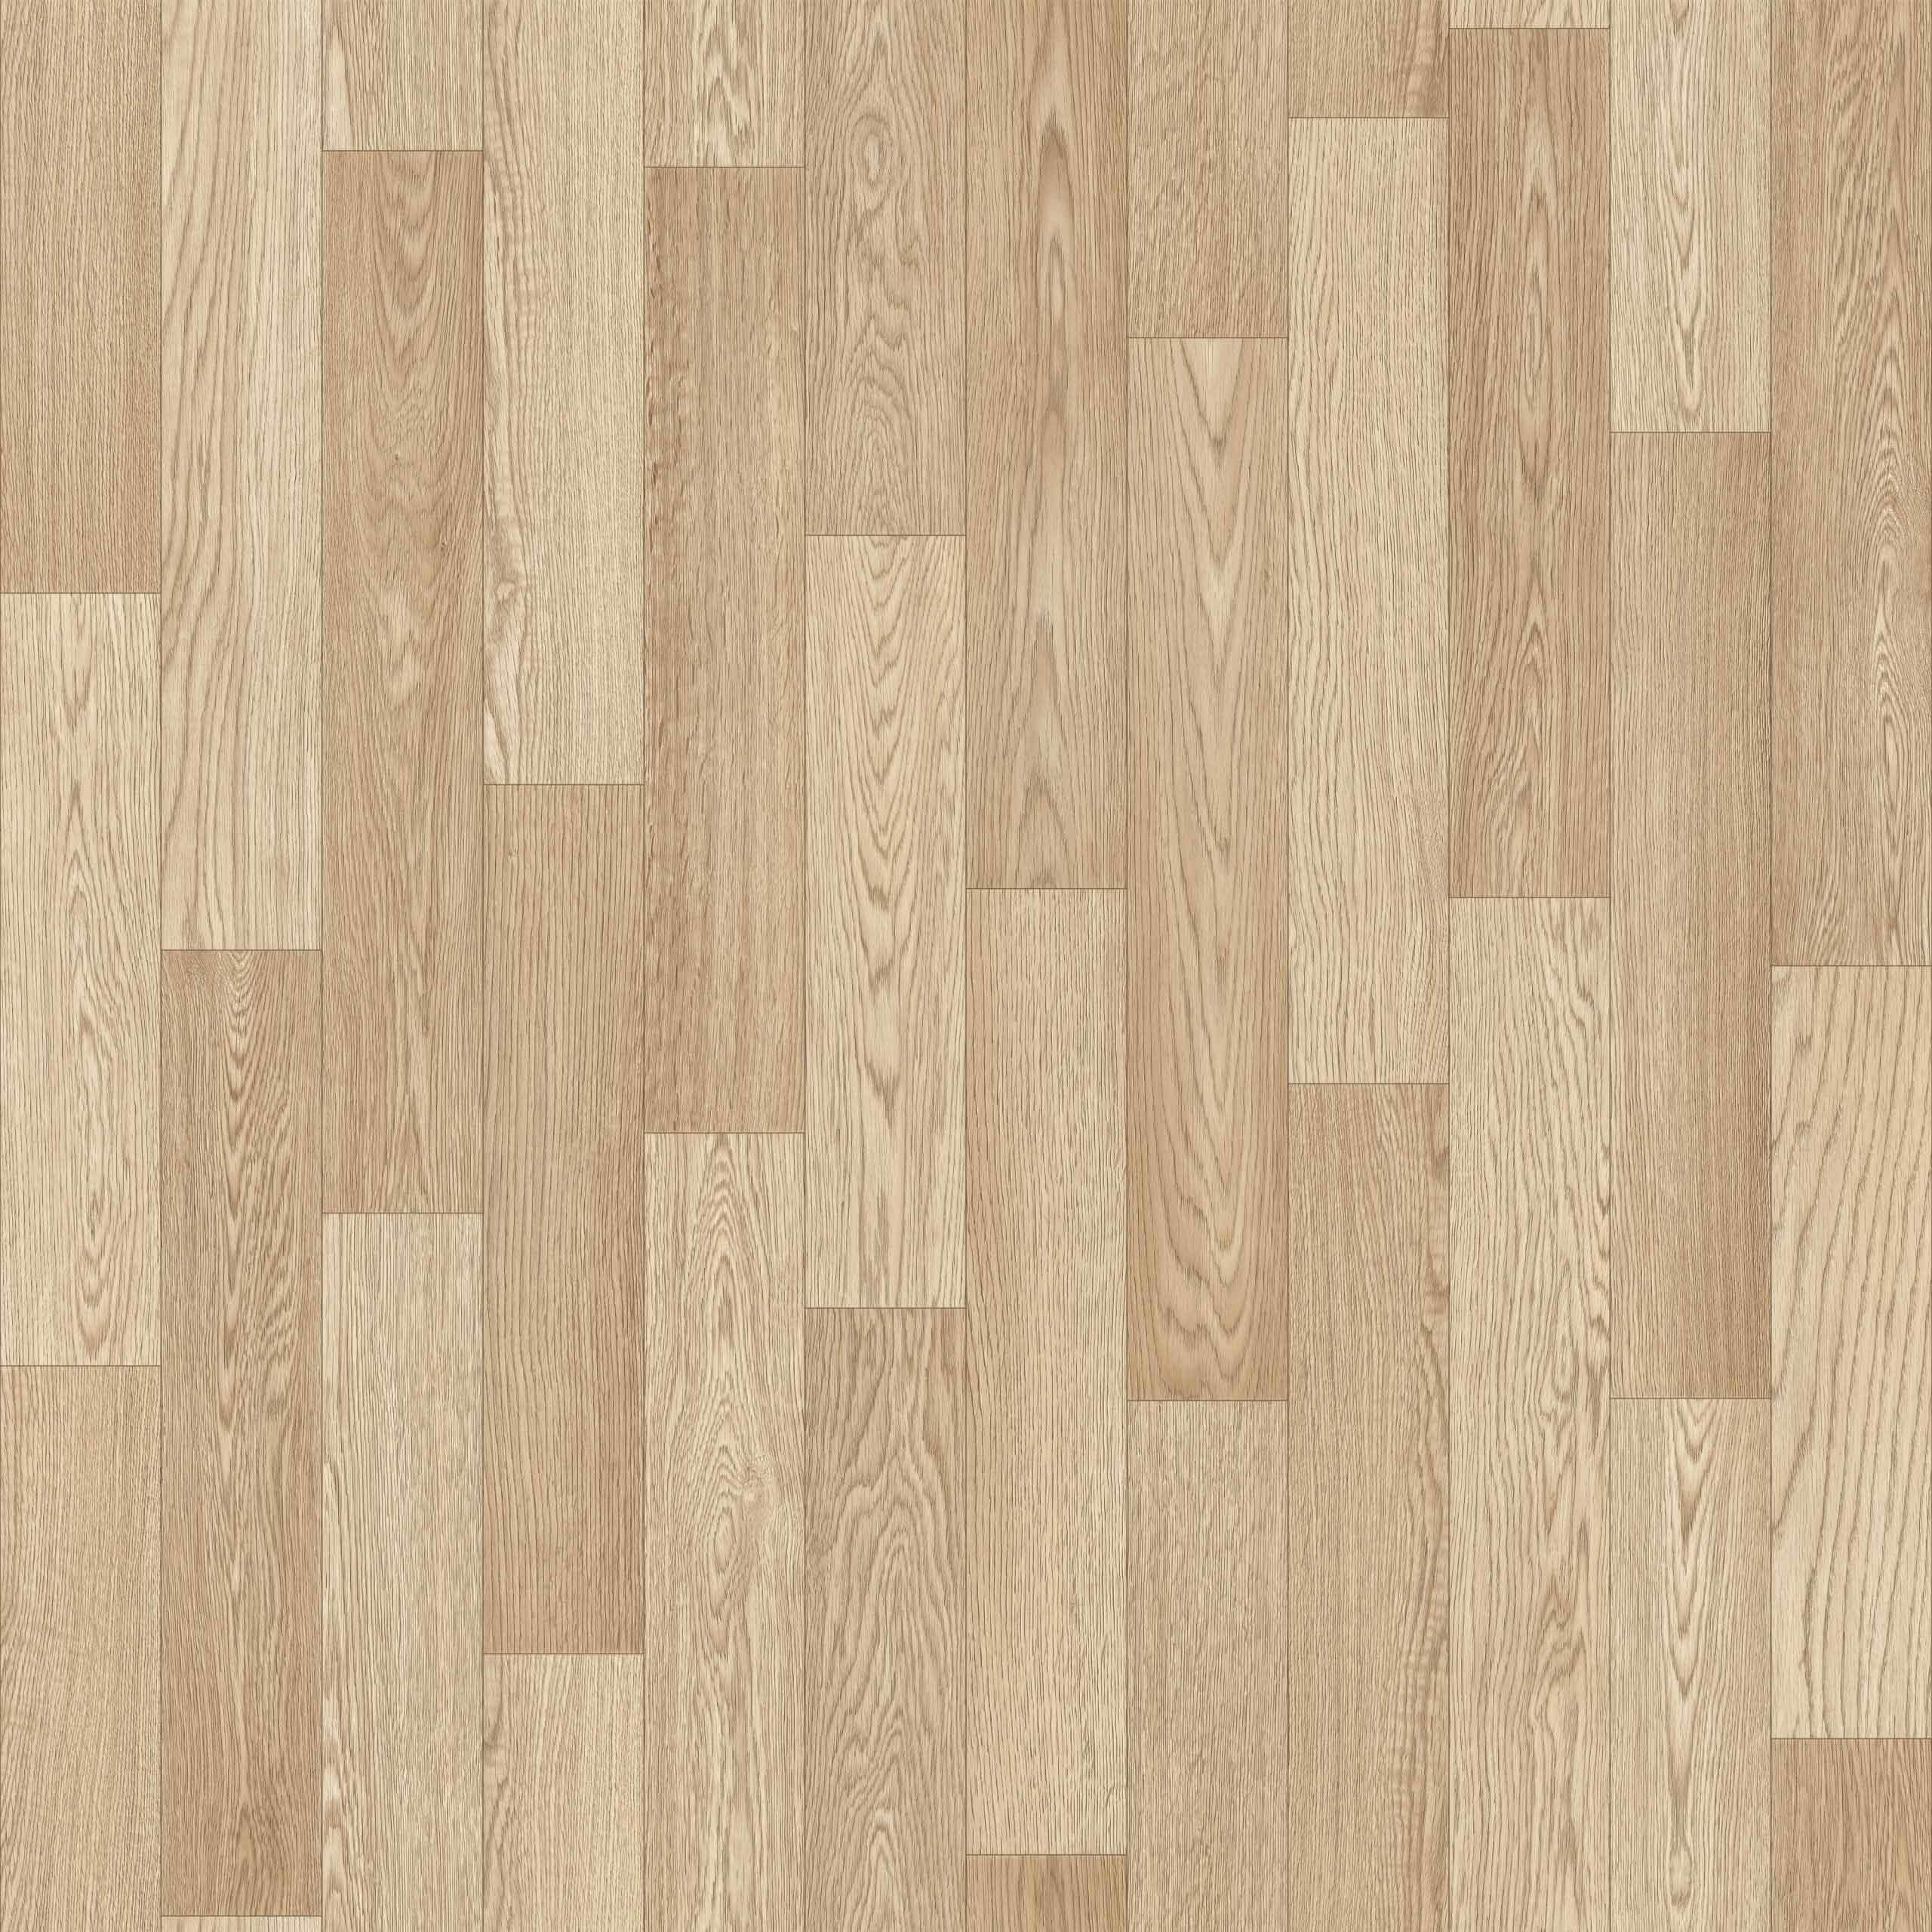 BONITA BF112 Savile Row Plank effect Vinyl Flooring